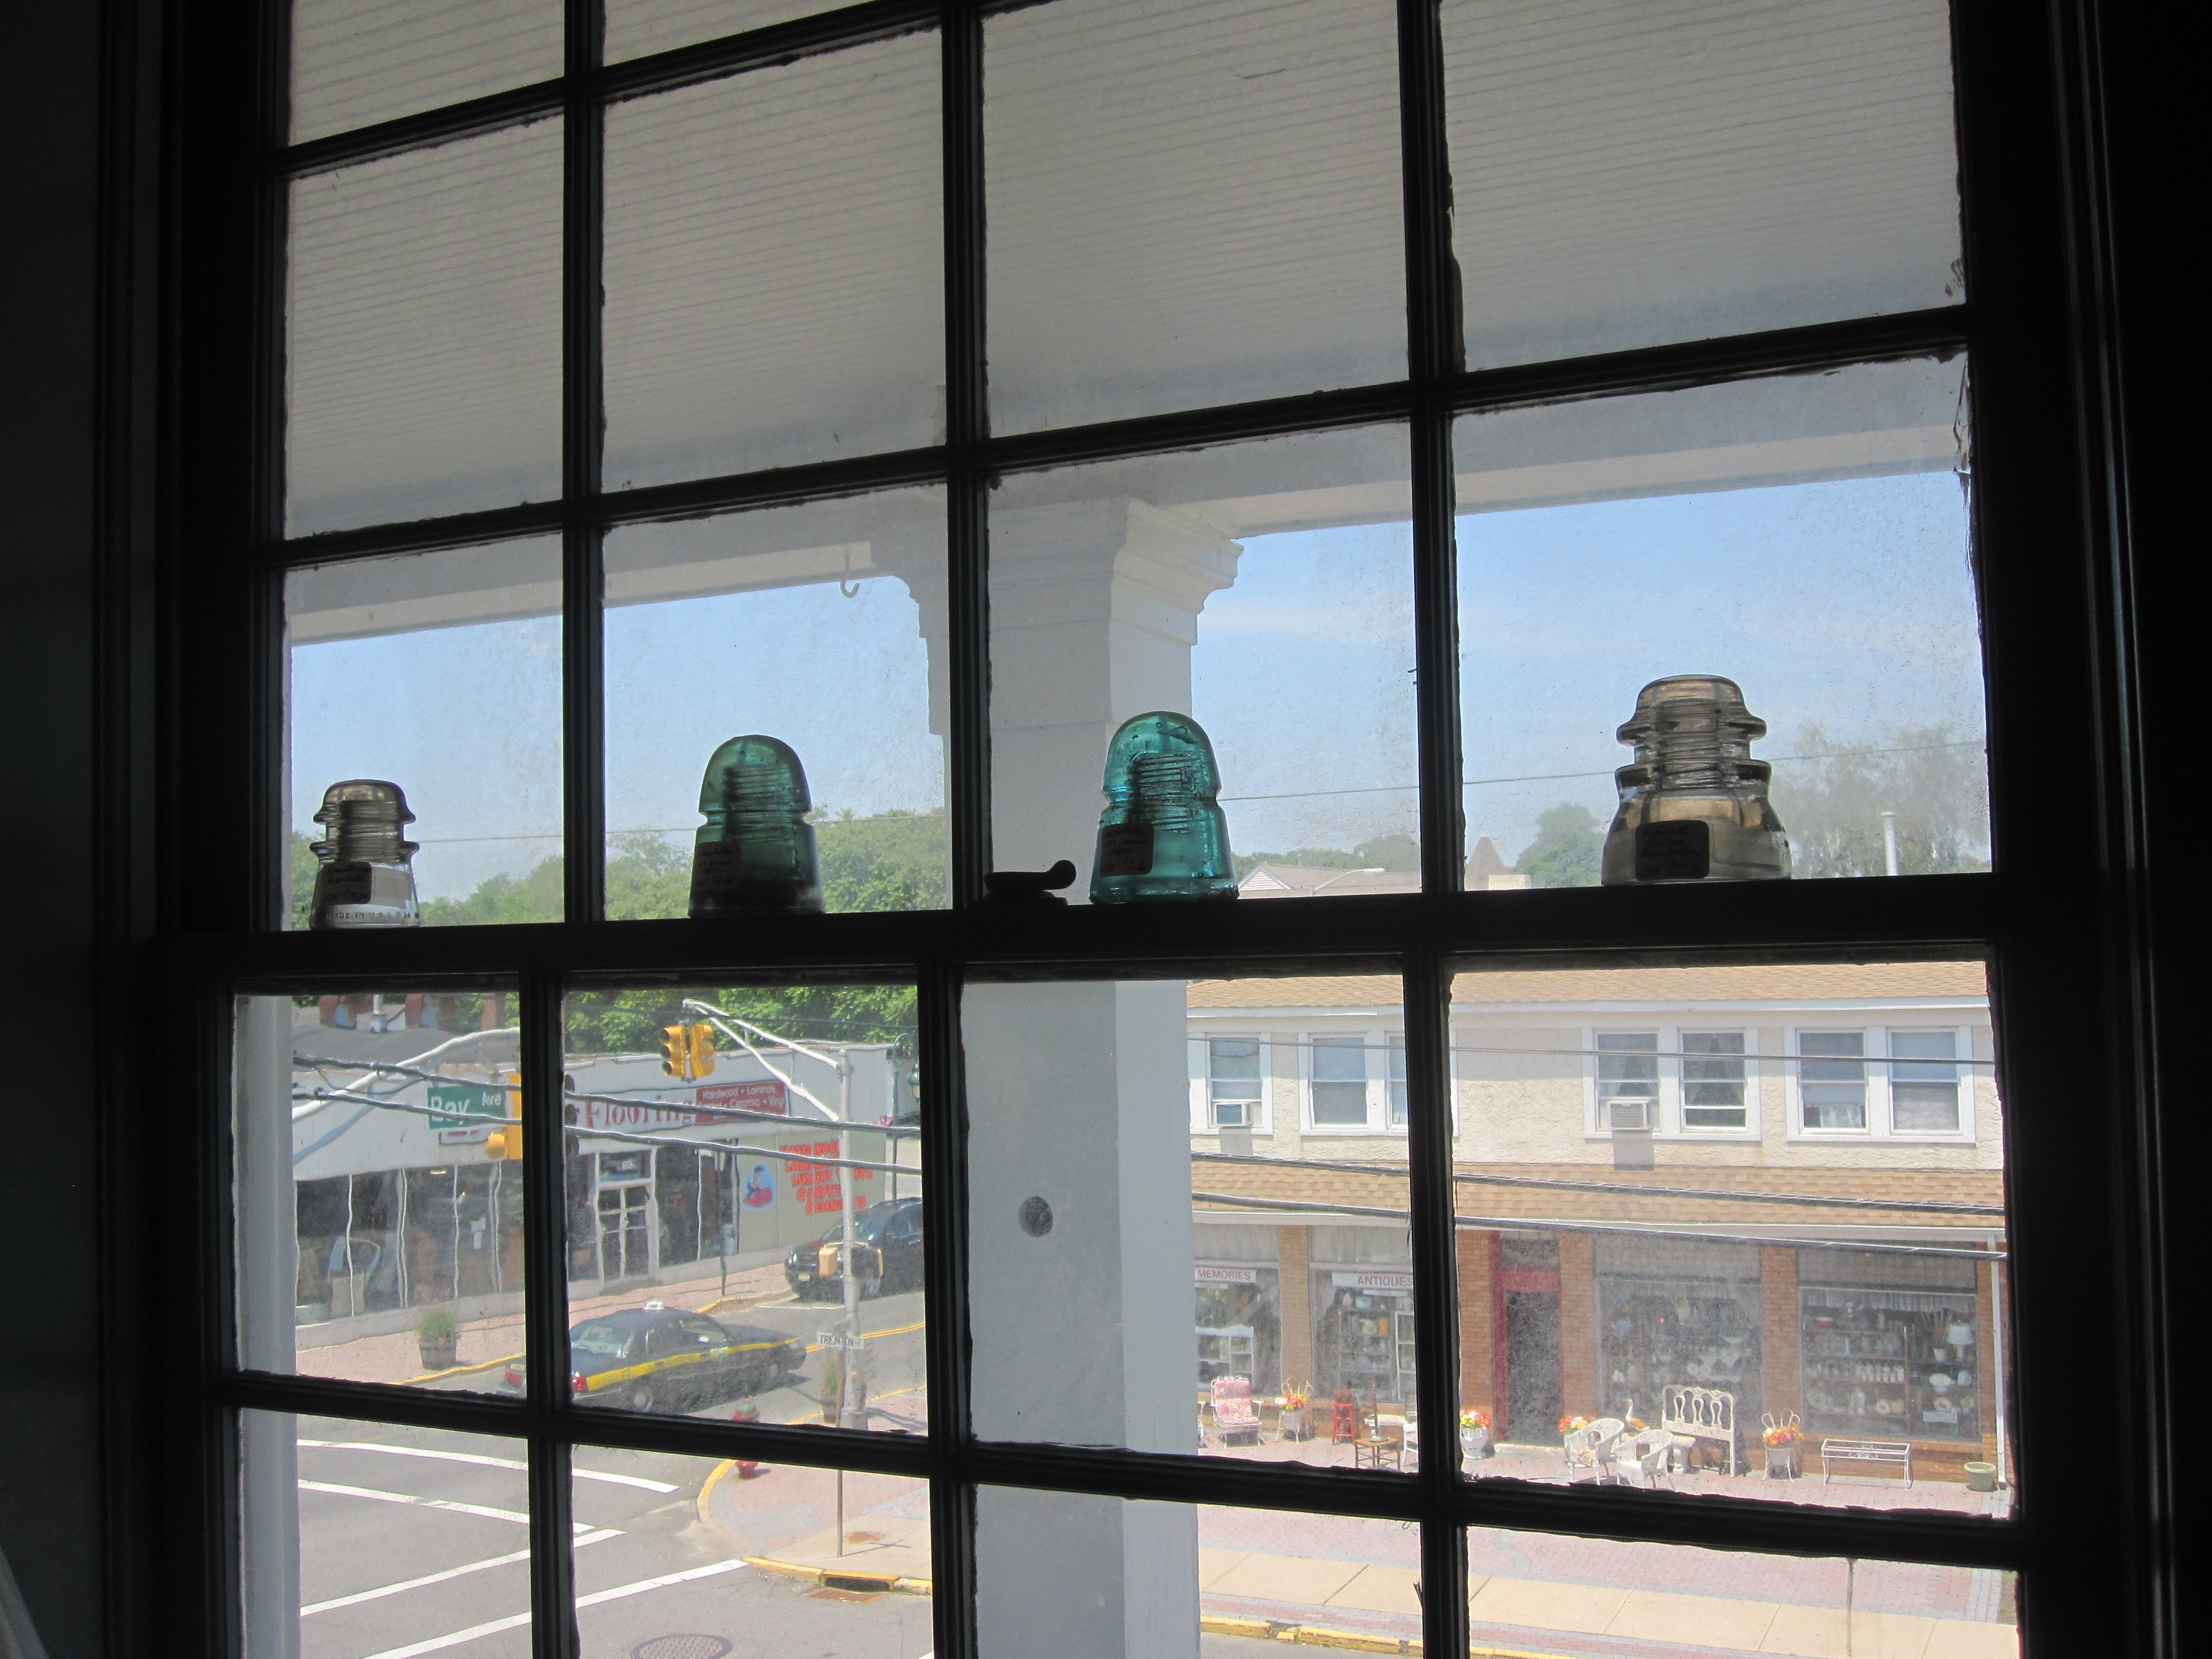 Glass Insulators in the window